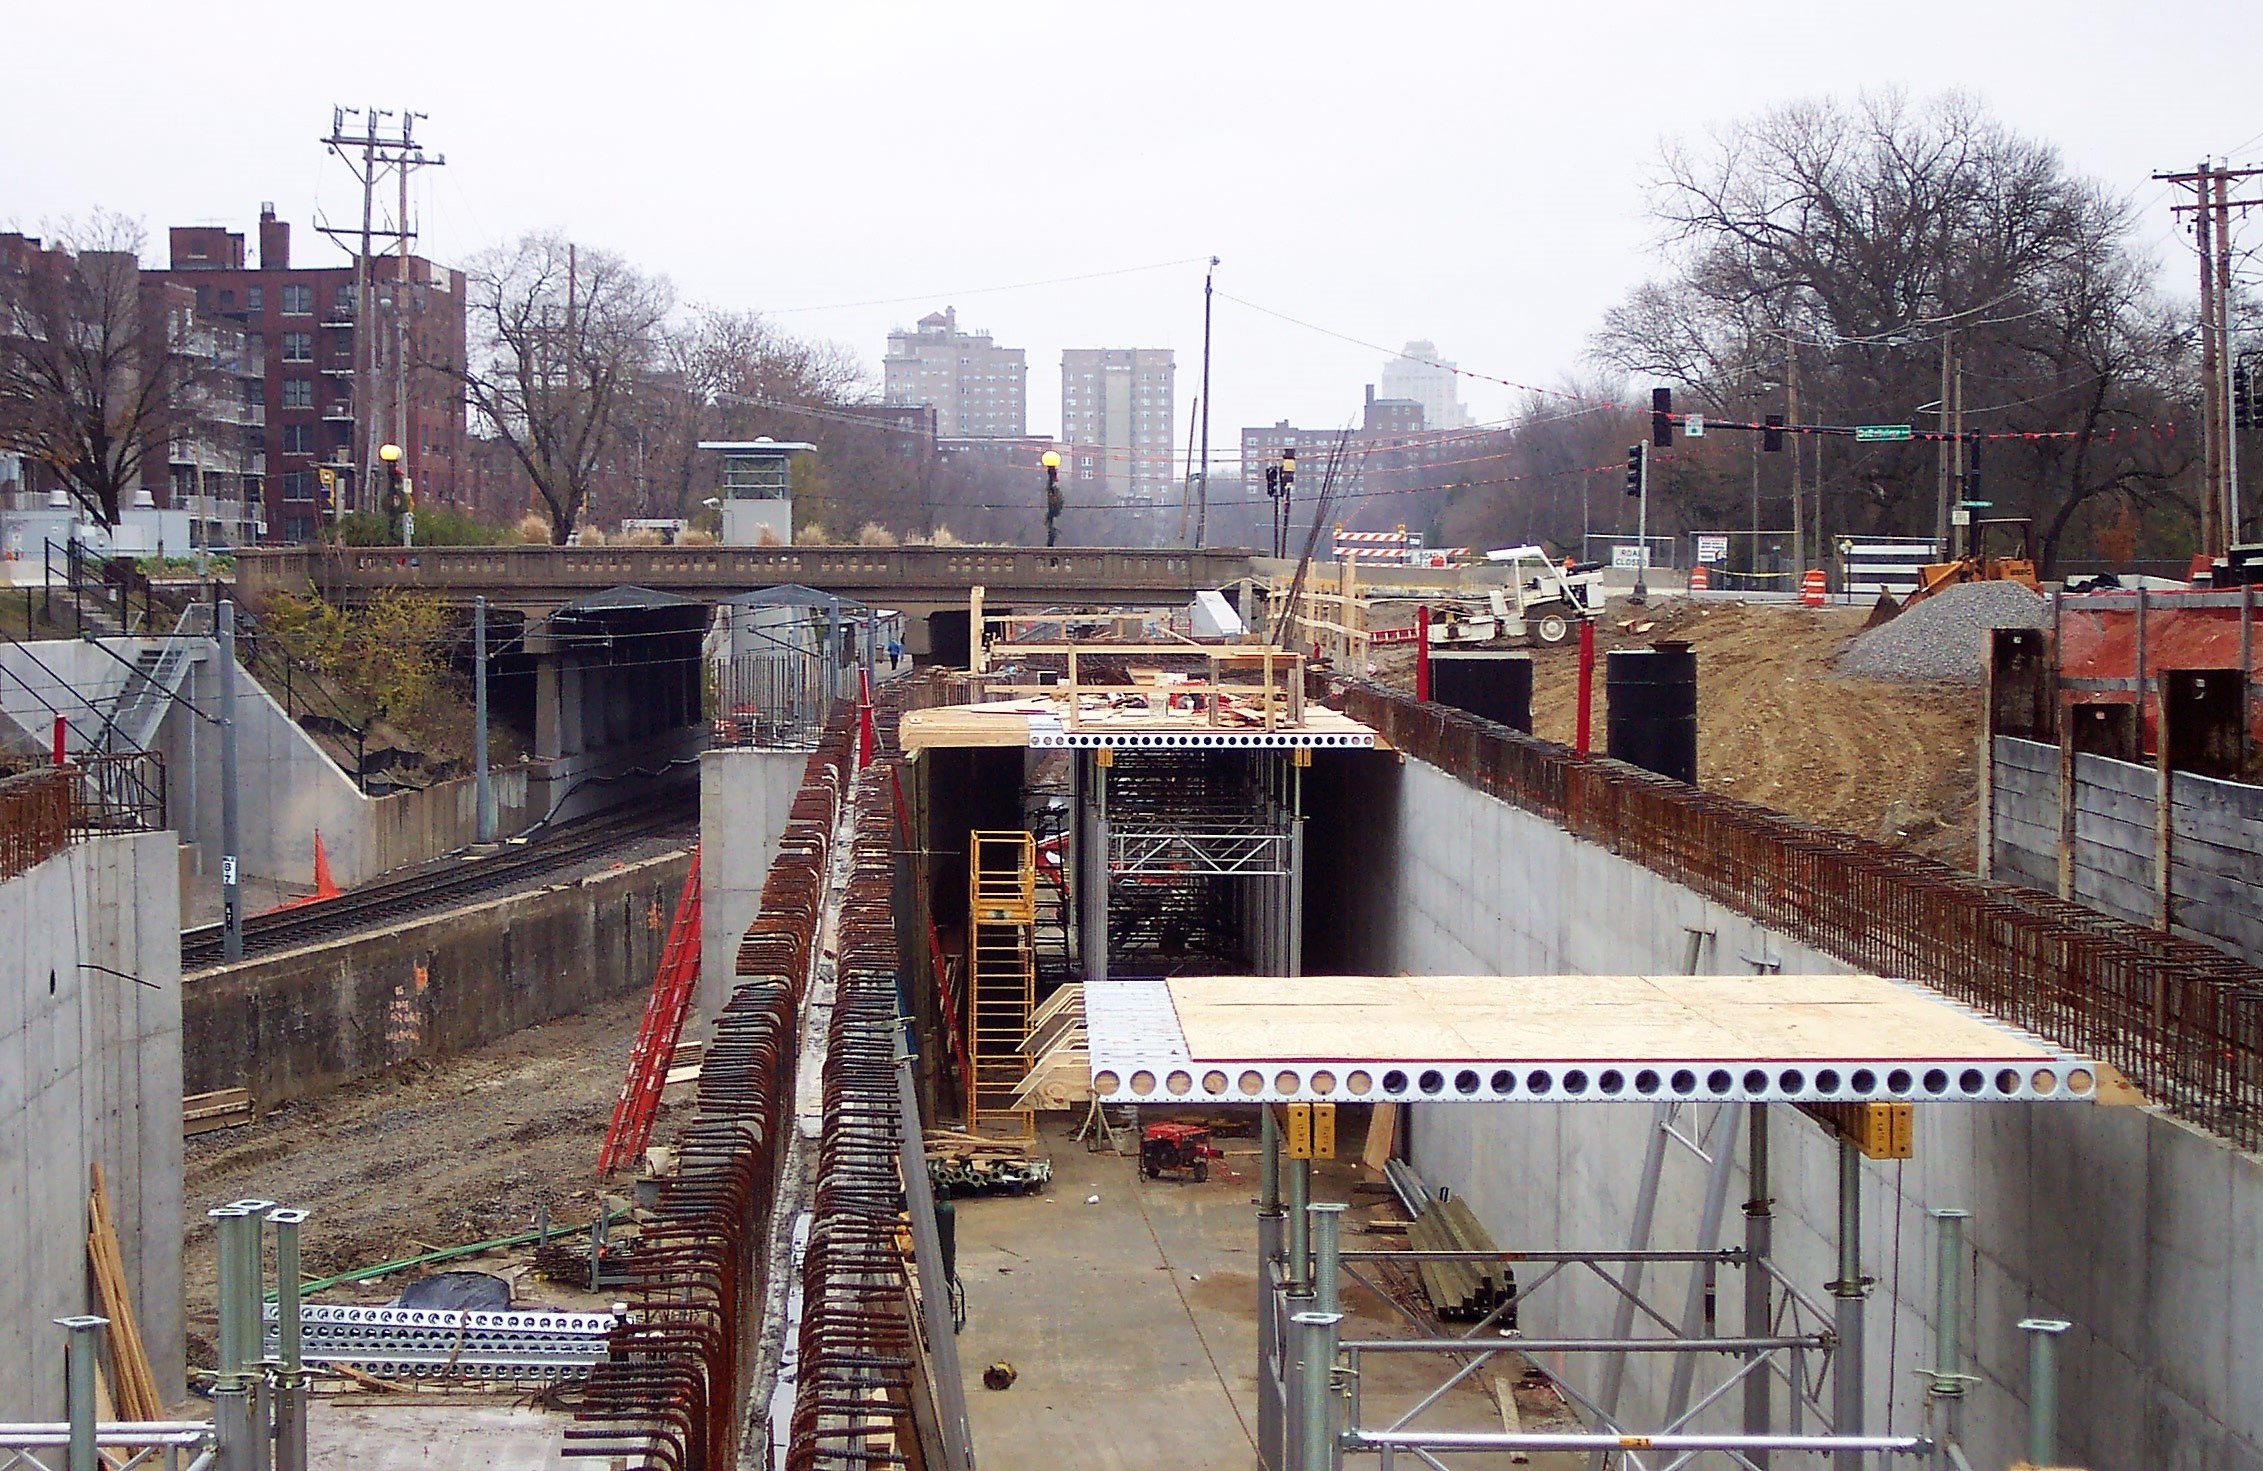 construction near MetroLink tracks